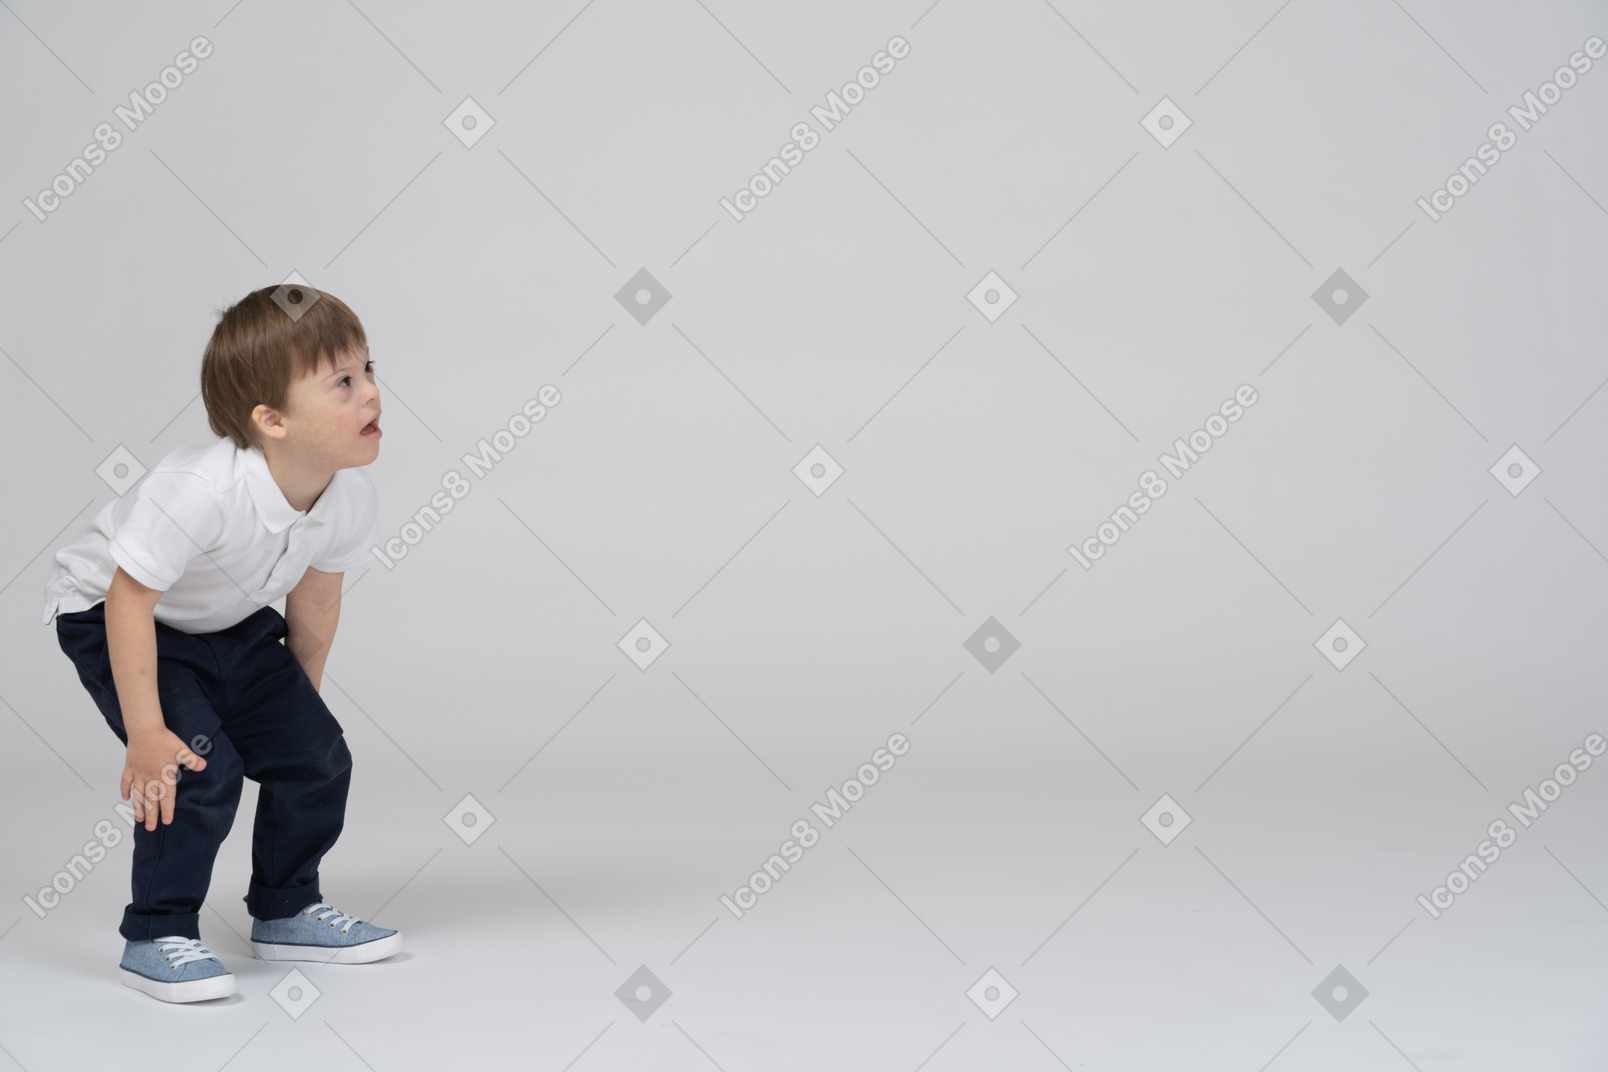 Little boy standing with bent knees